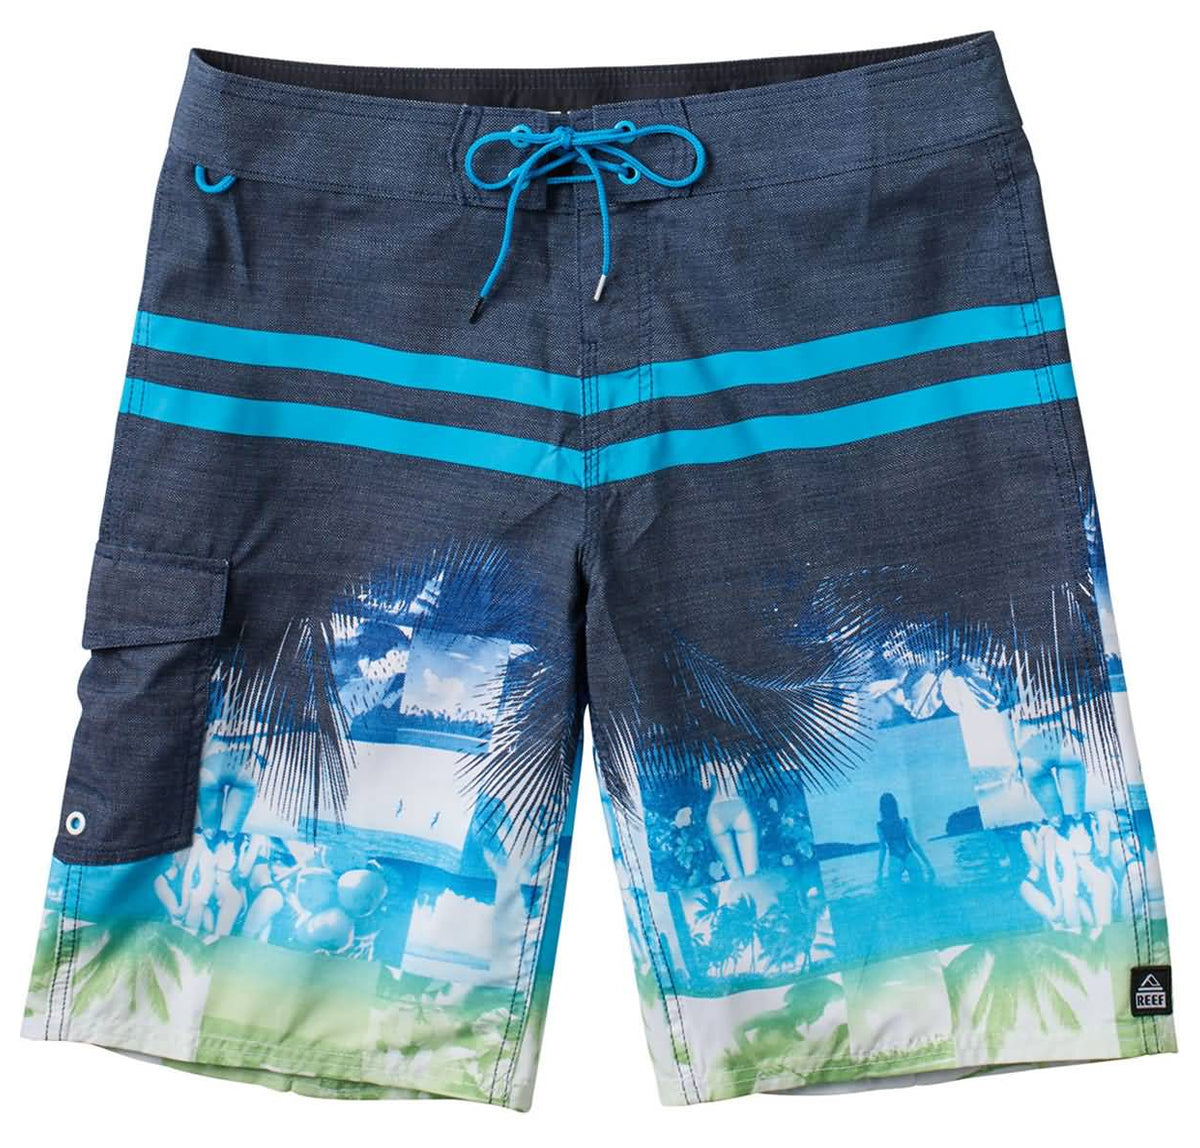 Reef Maine Men's Boardshort Shorts